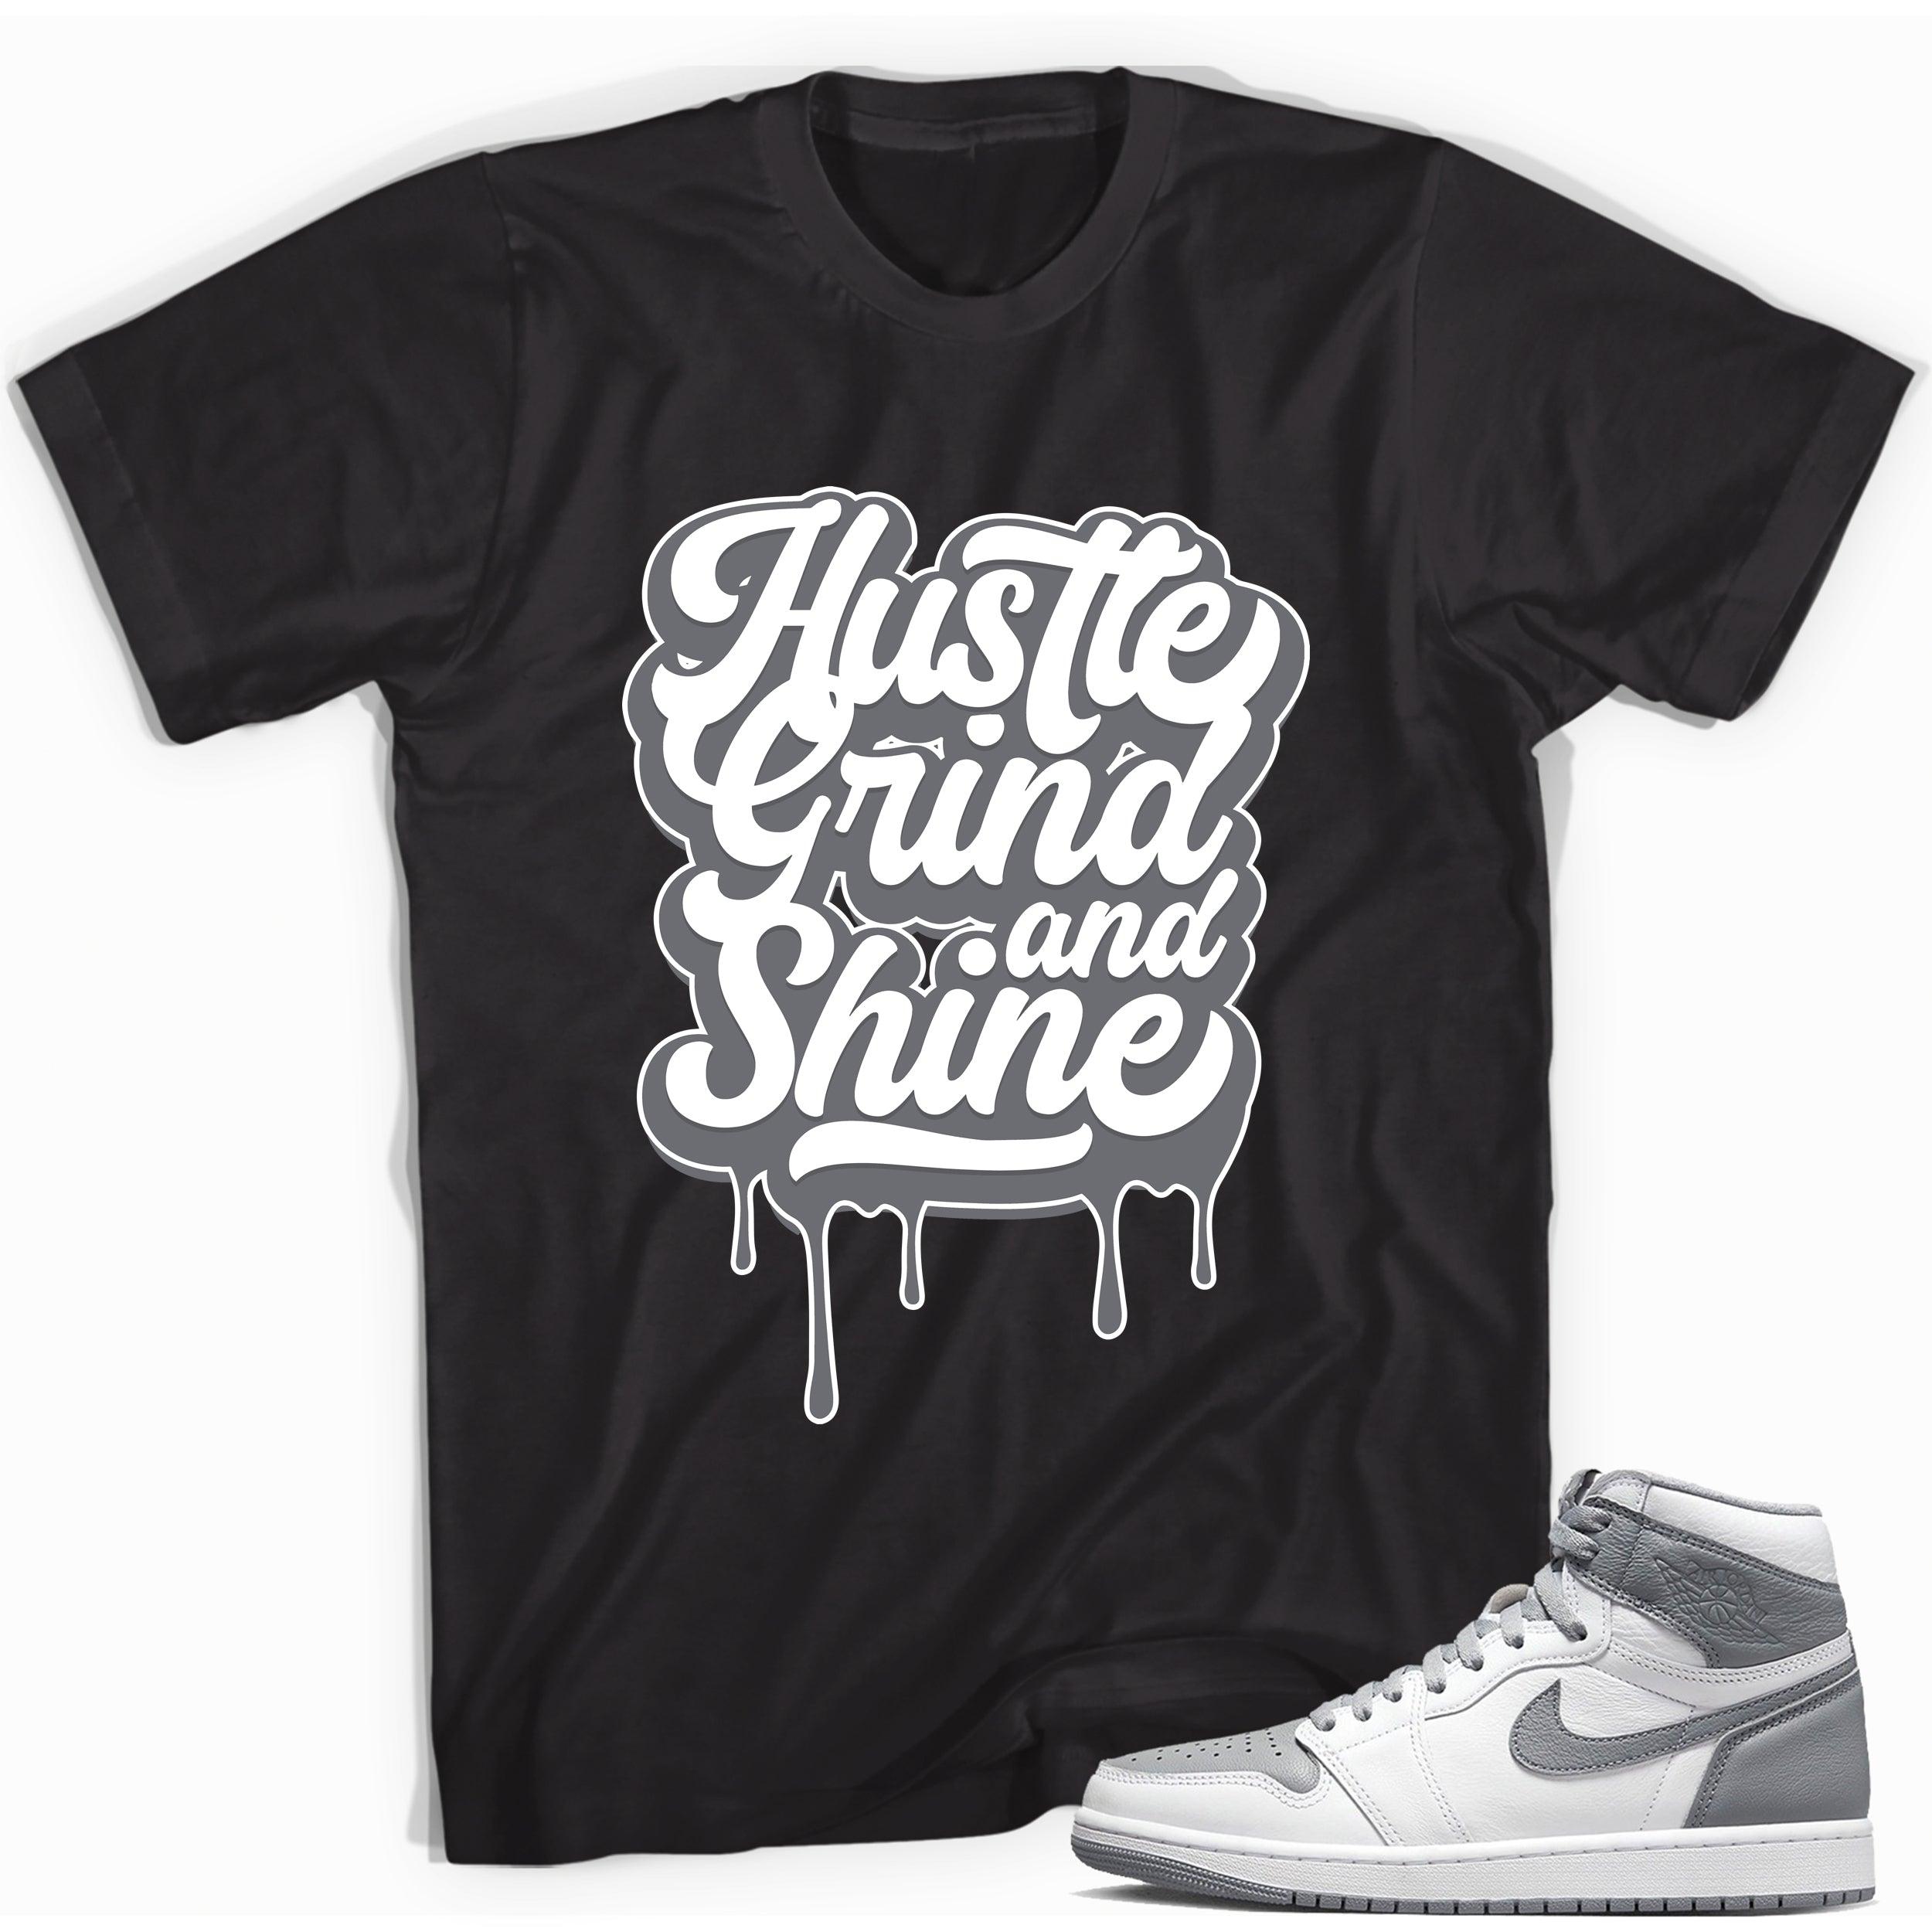  Hustle Grind and Shine Sneaker Tee for Jordan 1s photo